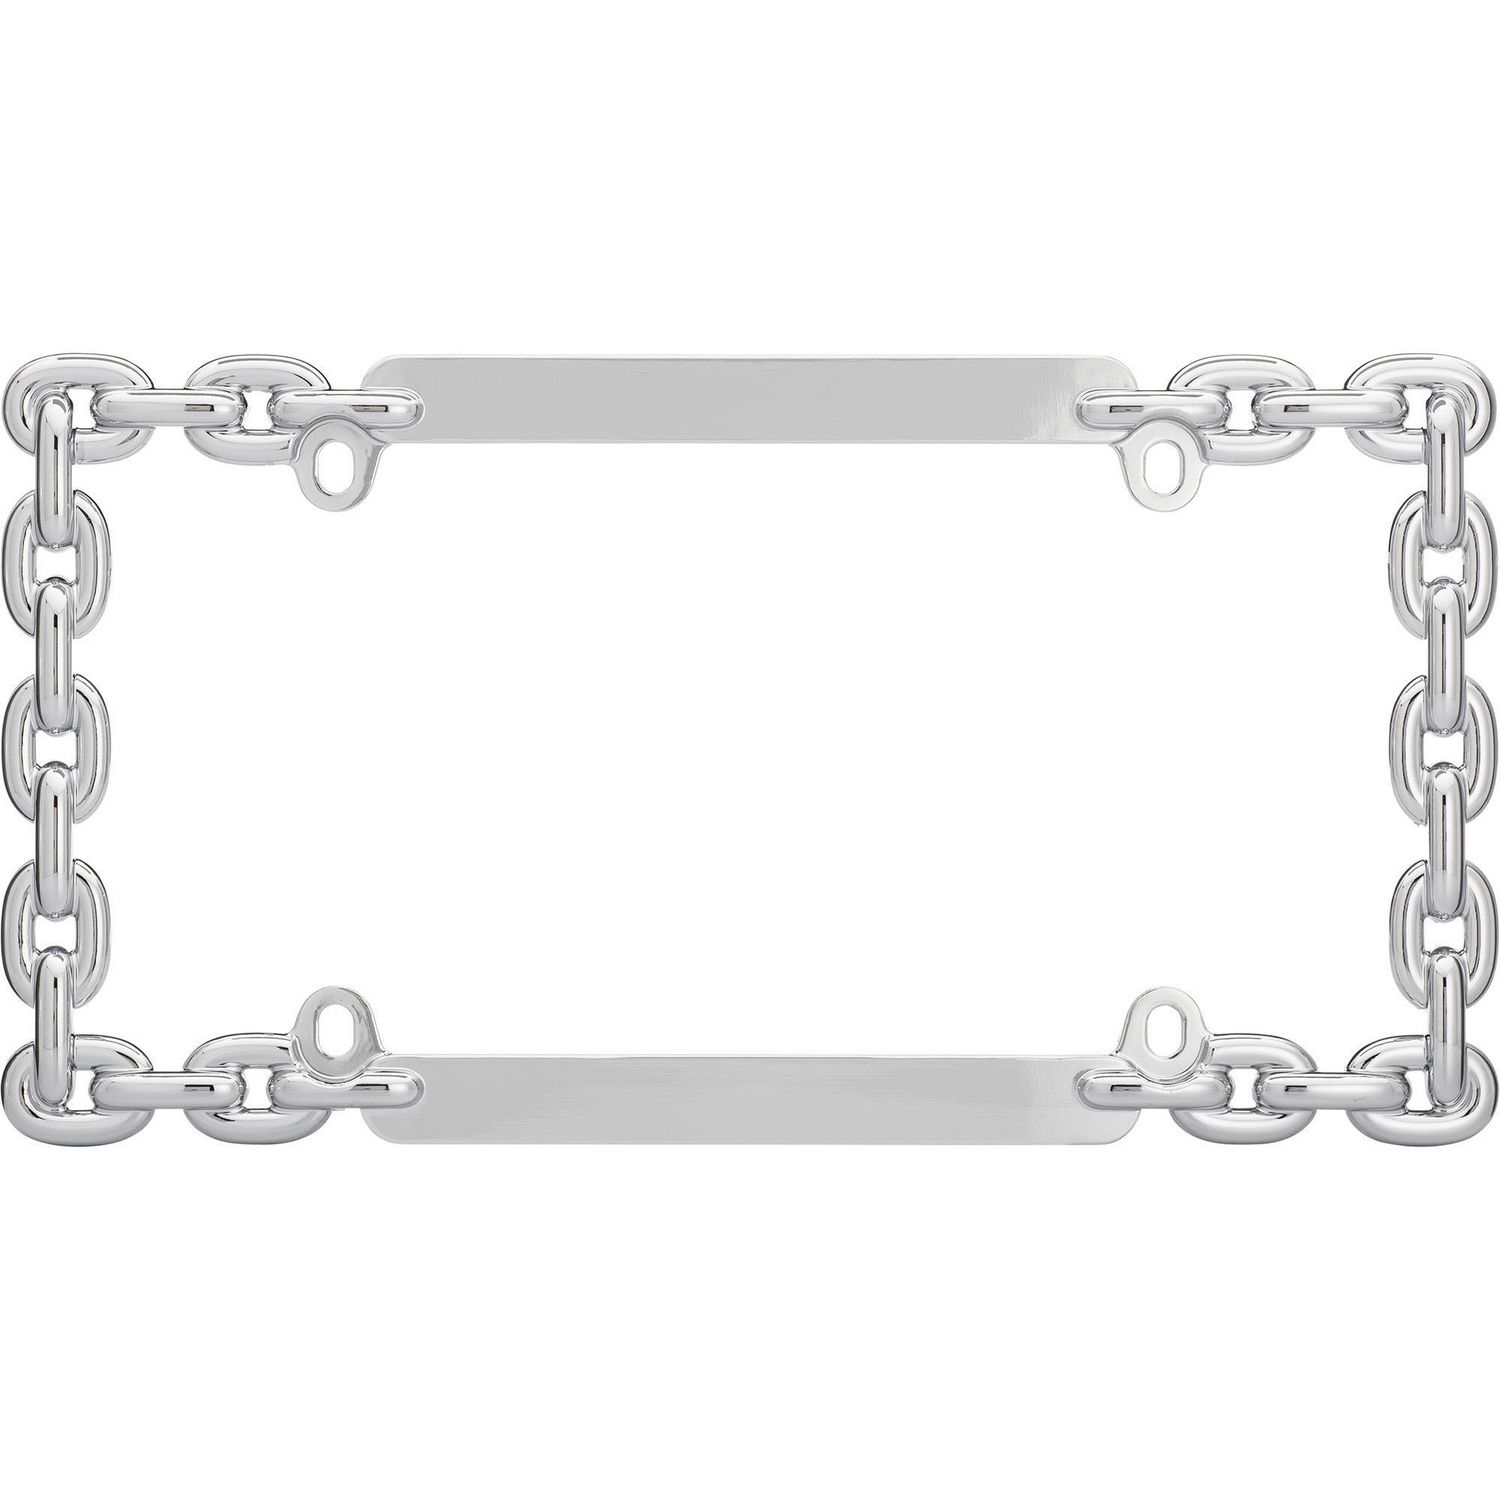 Cruiser Accessories Chain, Chrome License Plate Frame